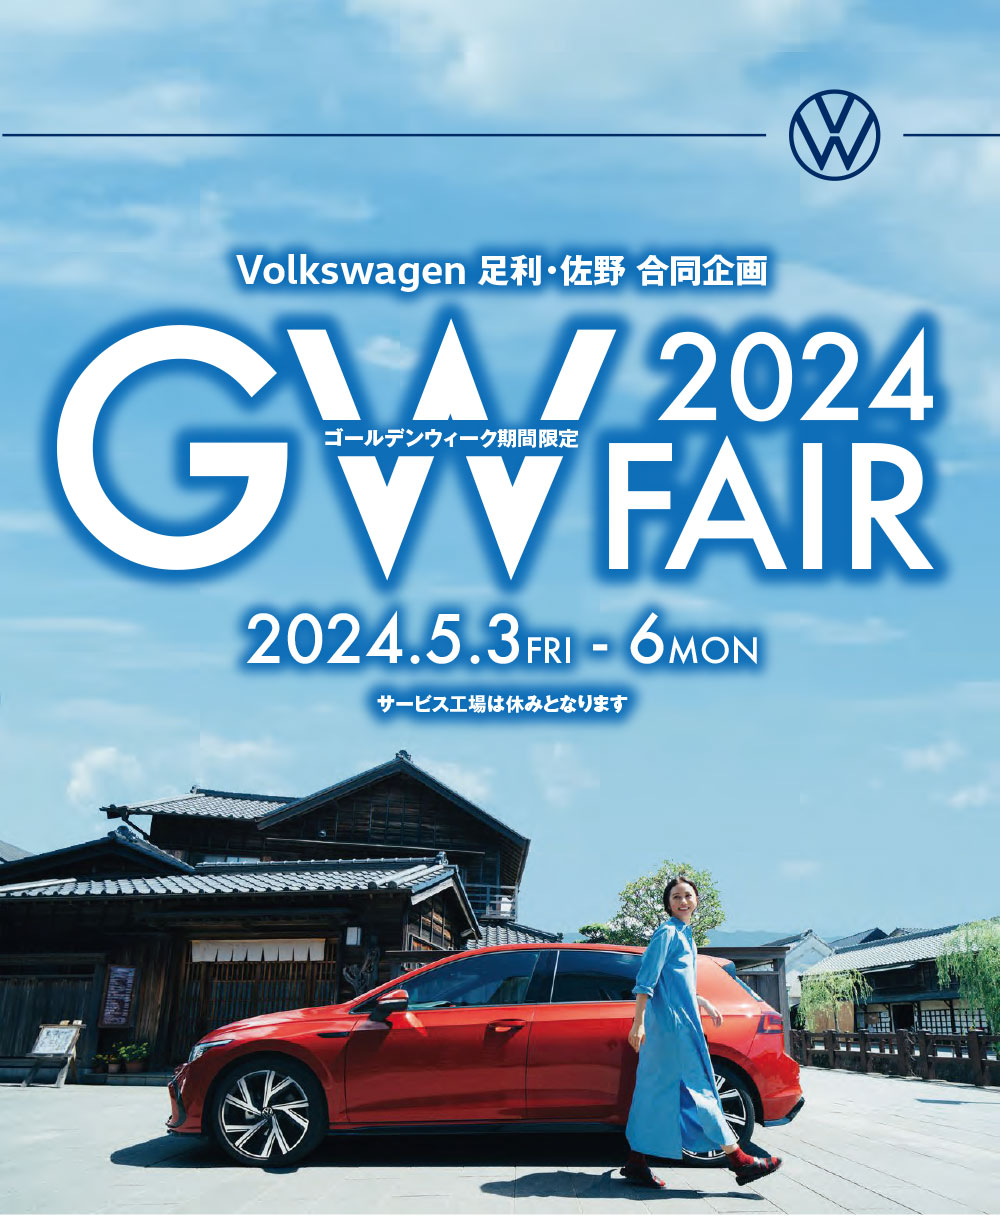 「Volkswagen 足利・佐野 合同企画 GW FAIR 2024」